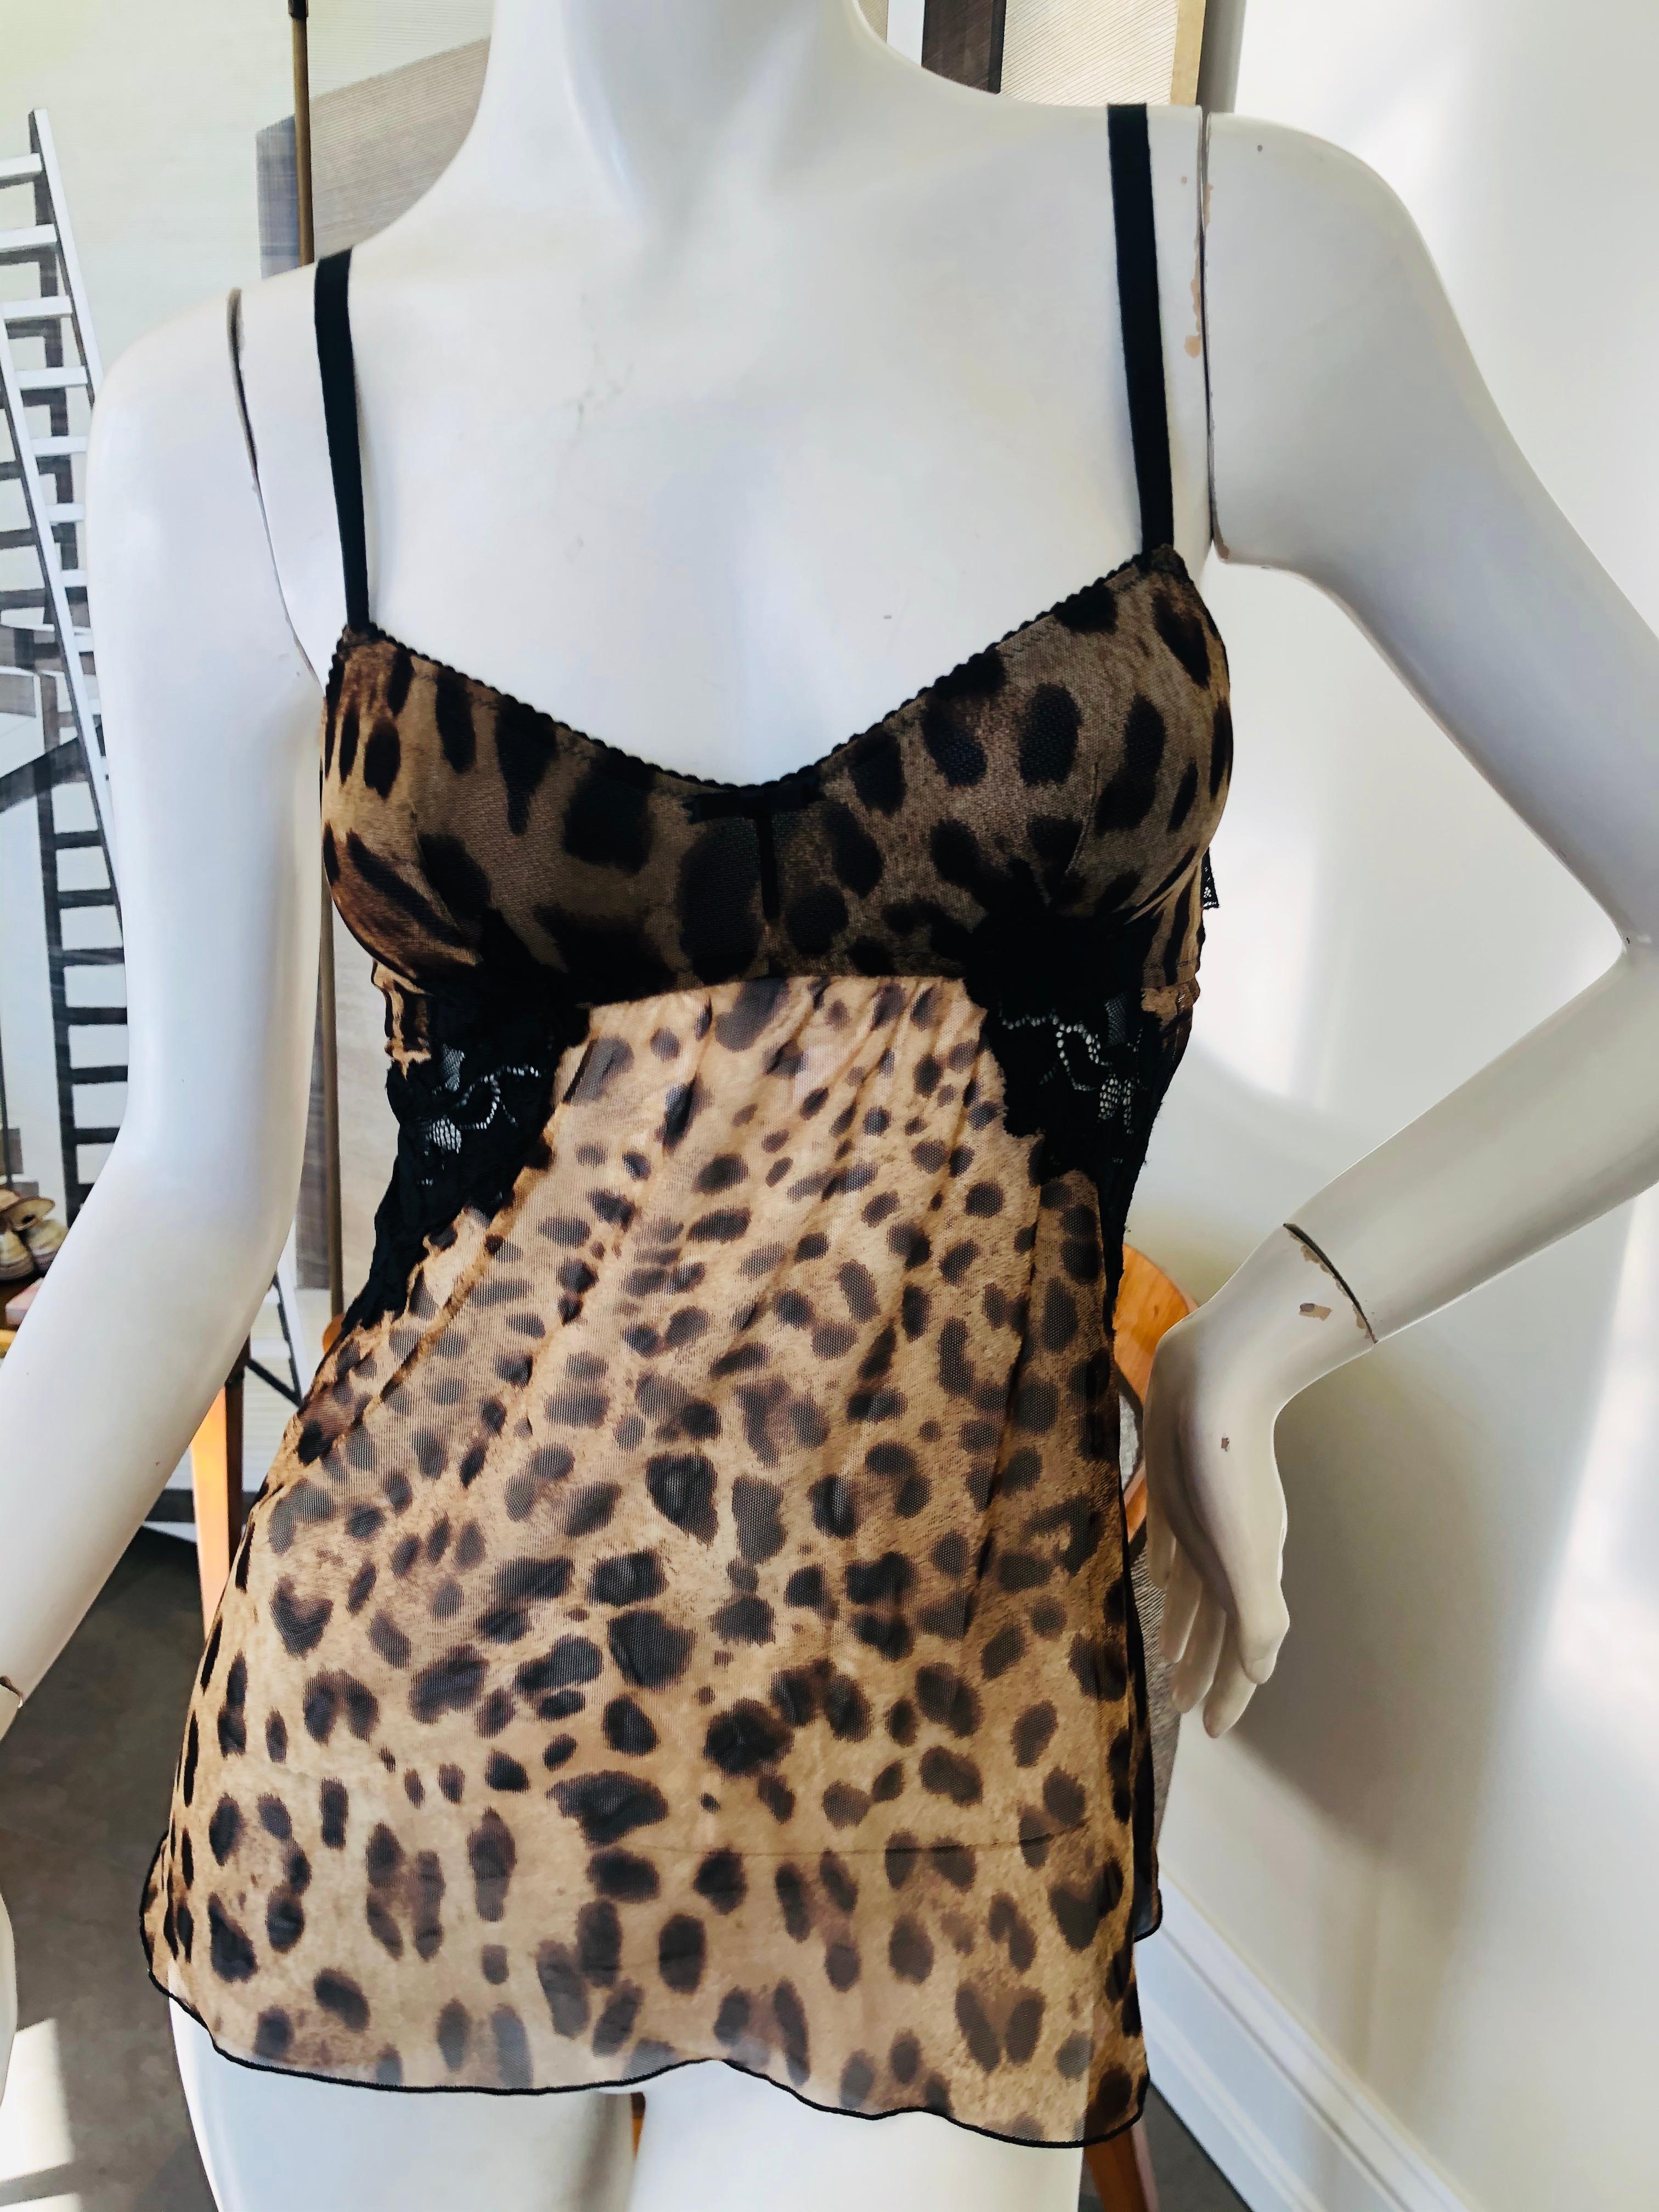 Dolce & Gabbana Vintage Lace Trimmed Leopard Print Negligee Top
No size label appx size S-M
 Bust 32'
Waist 26